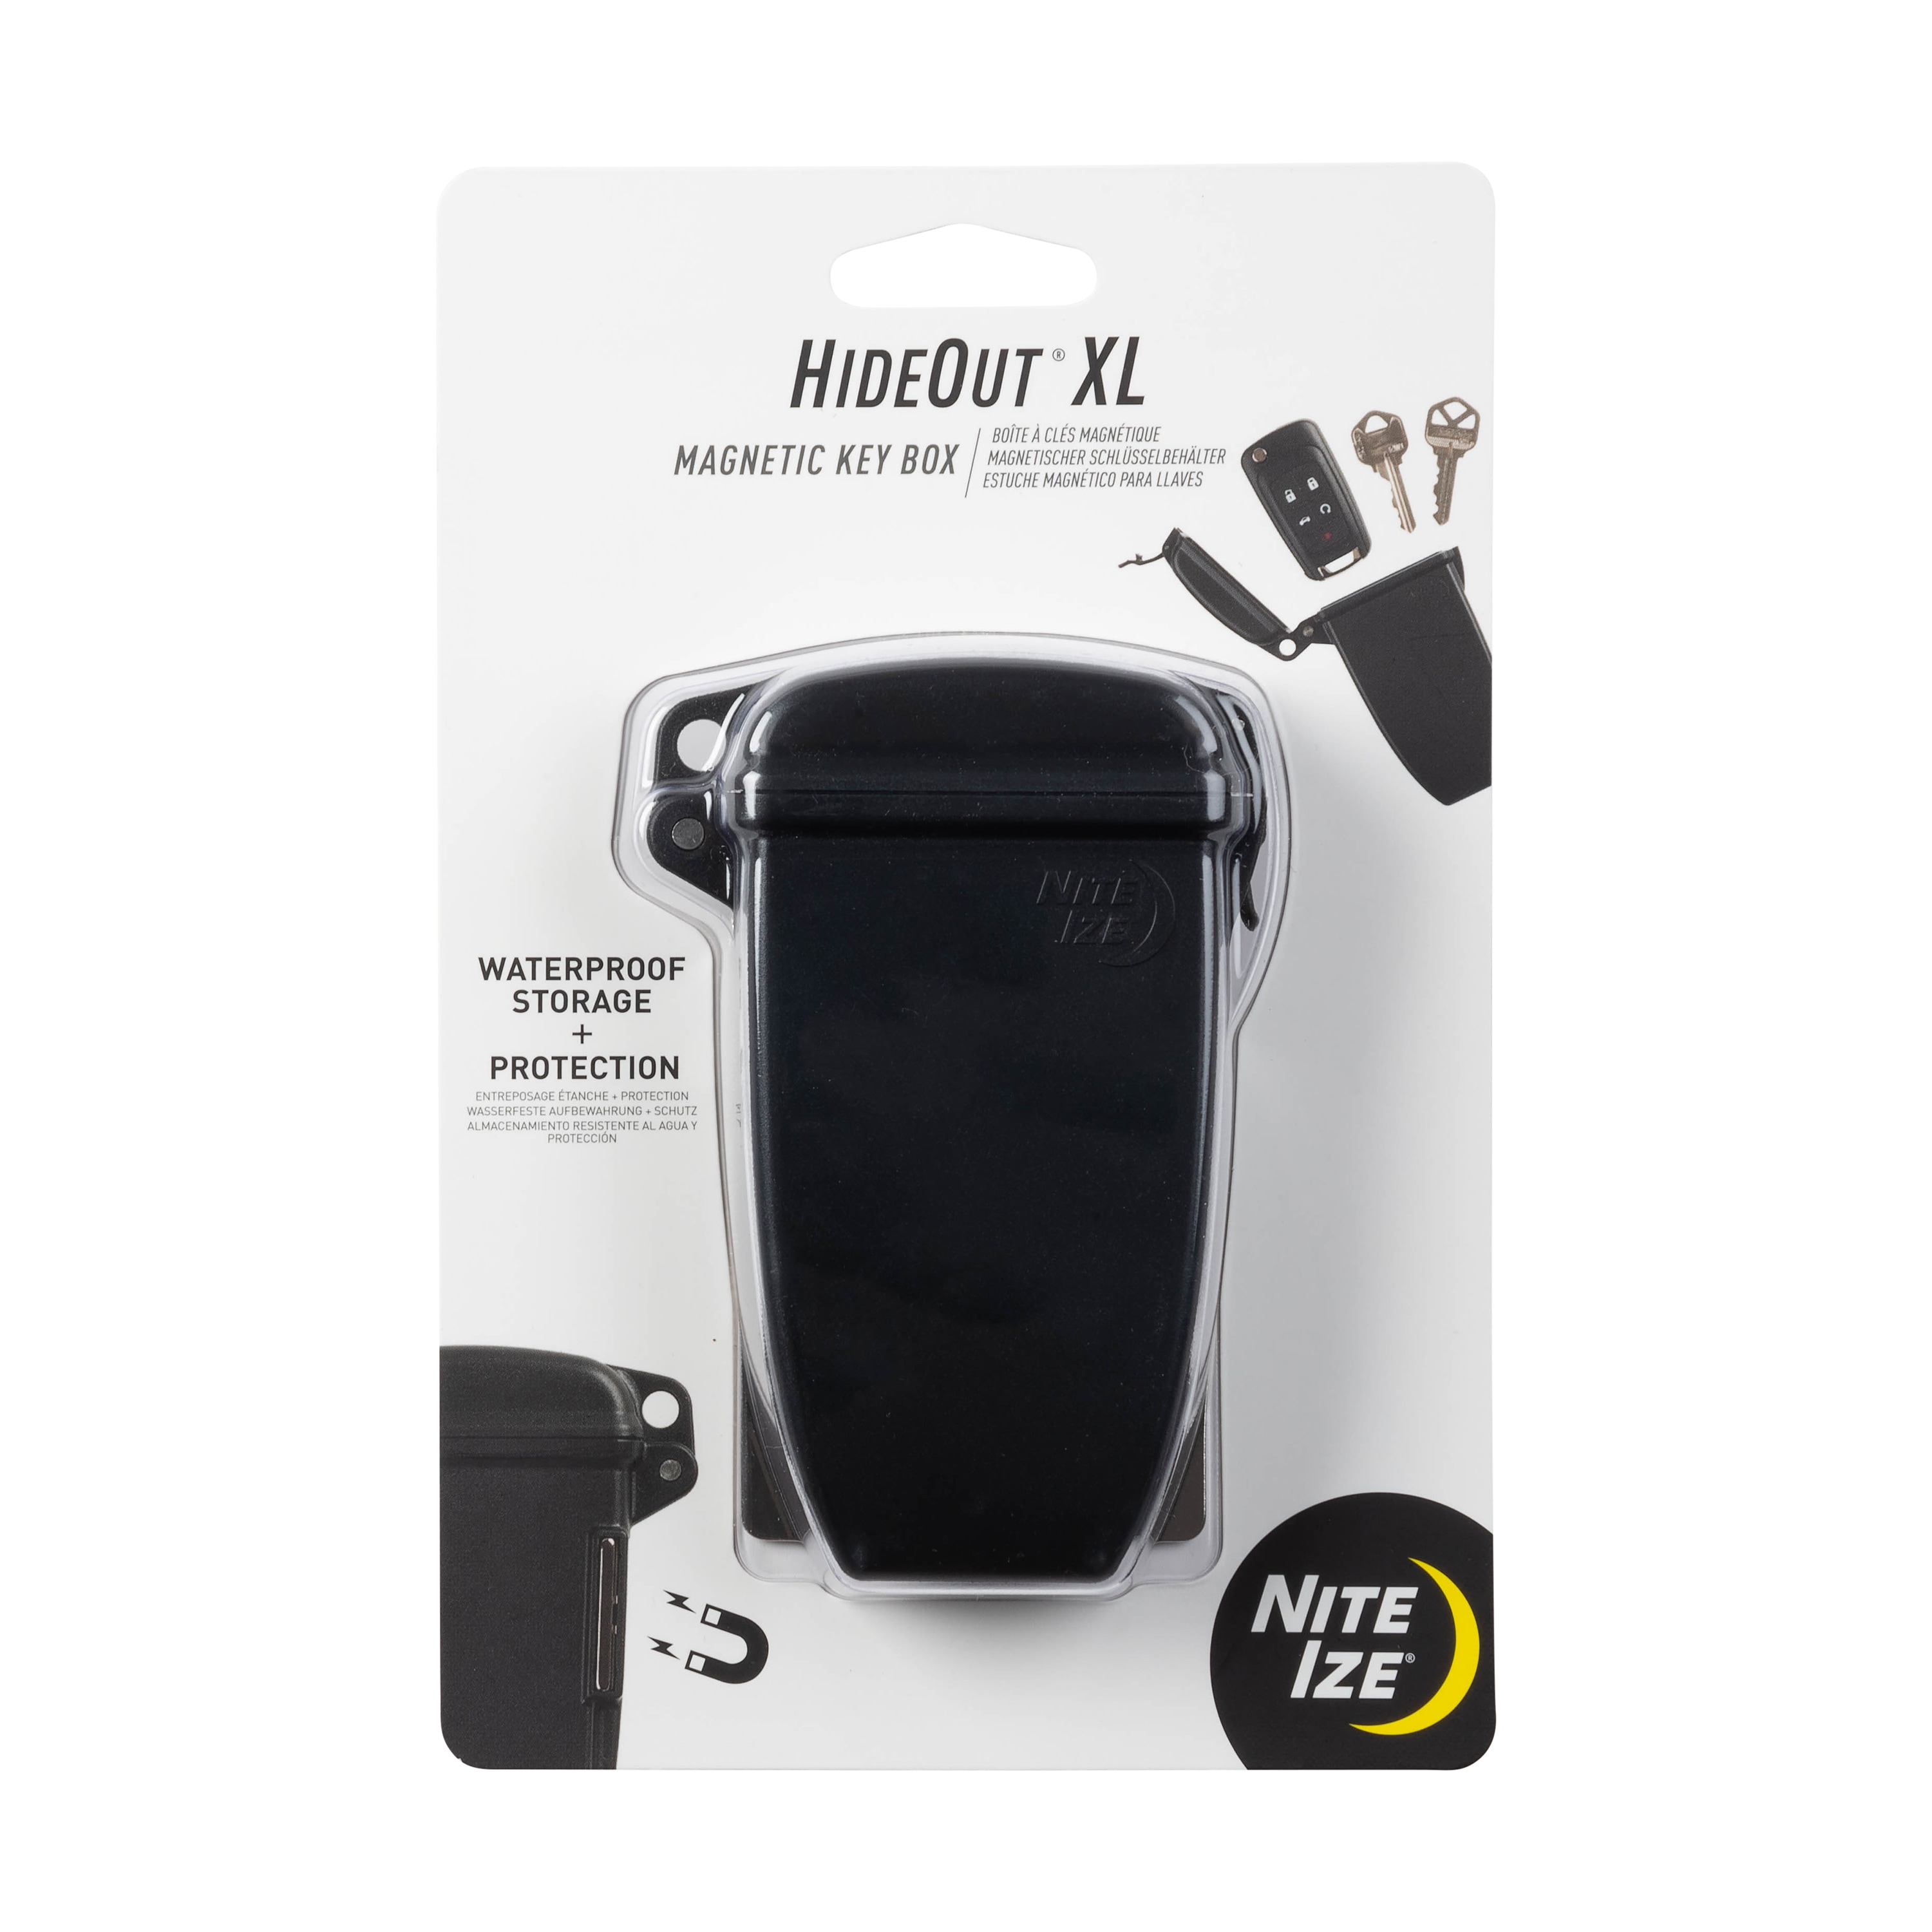 Nite Ize HideOut XL Magnetic Key Box - Black, Waterproof, Extra-Large Size, Neodymium Magnets